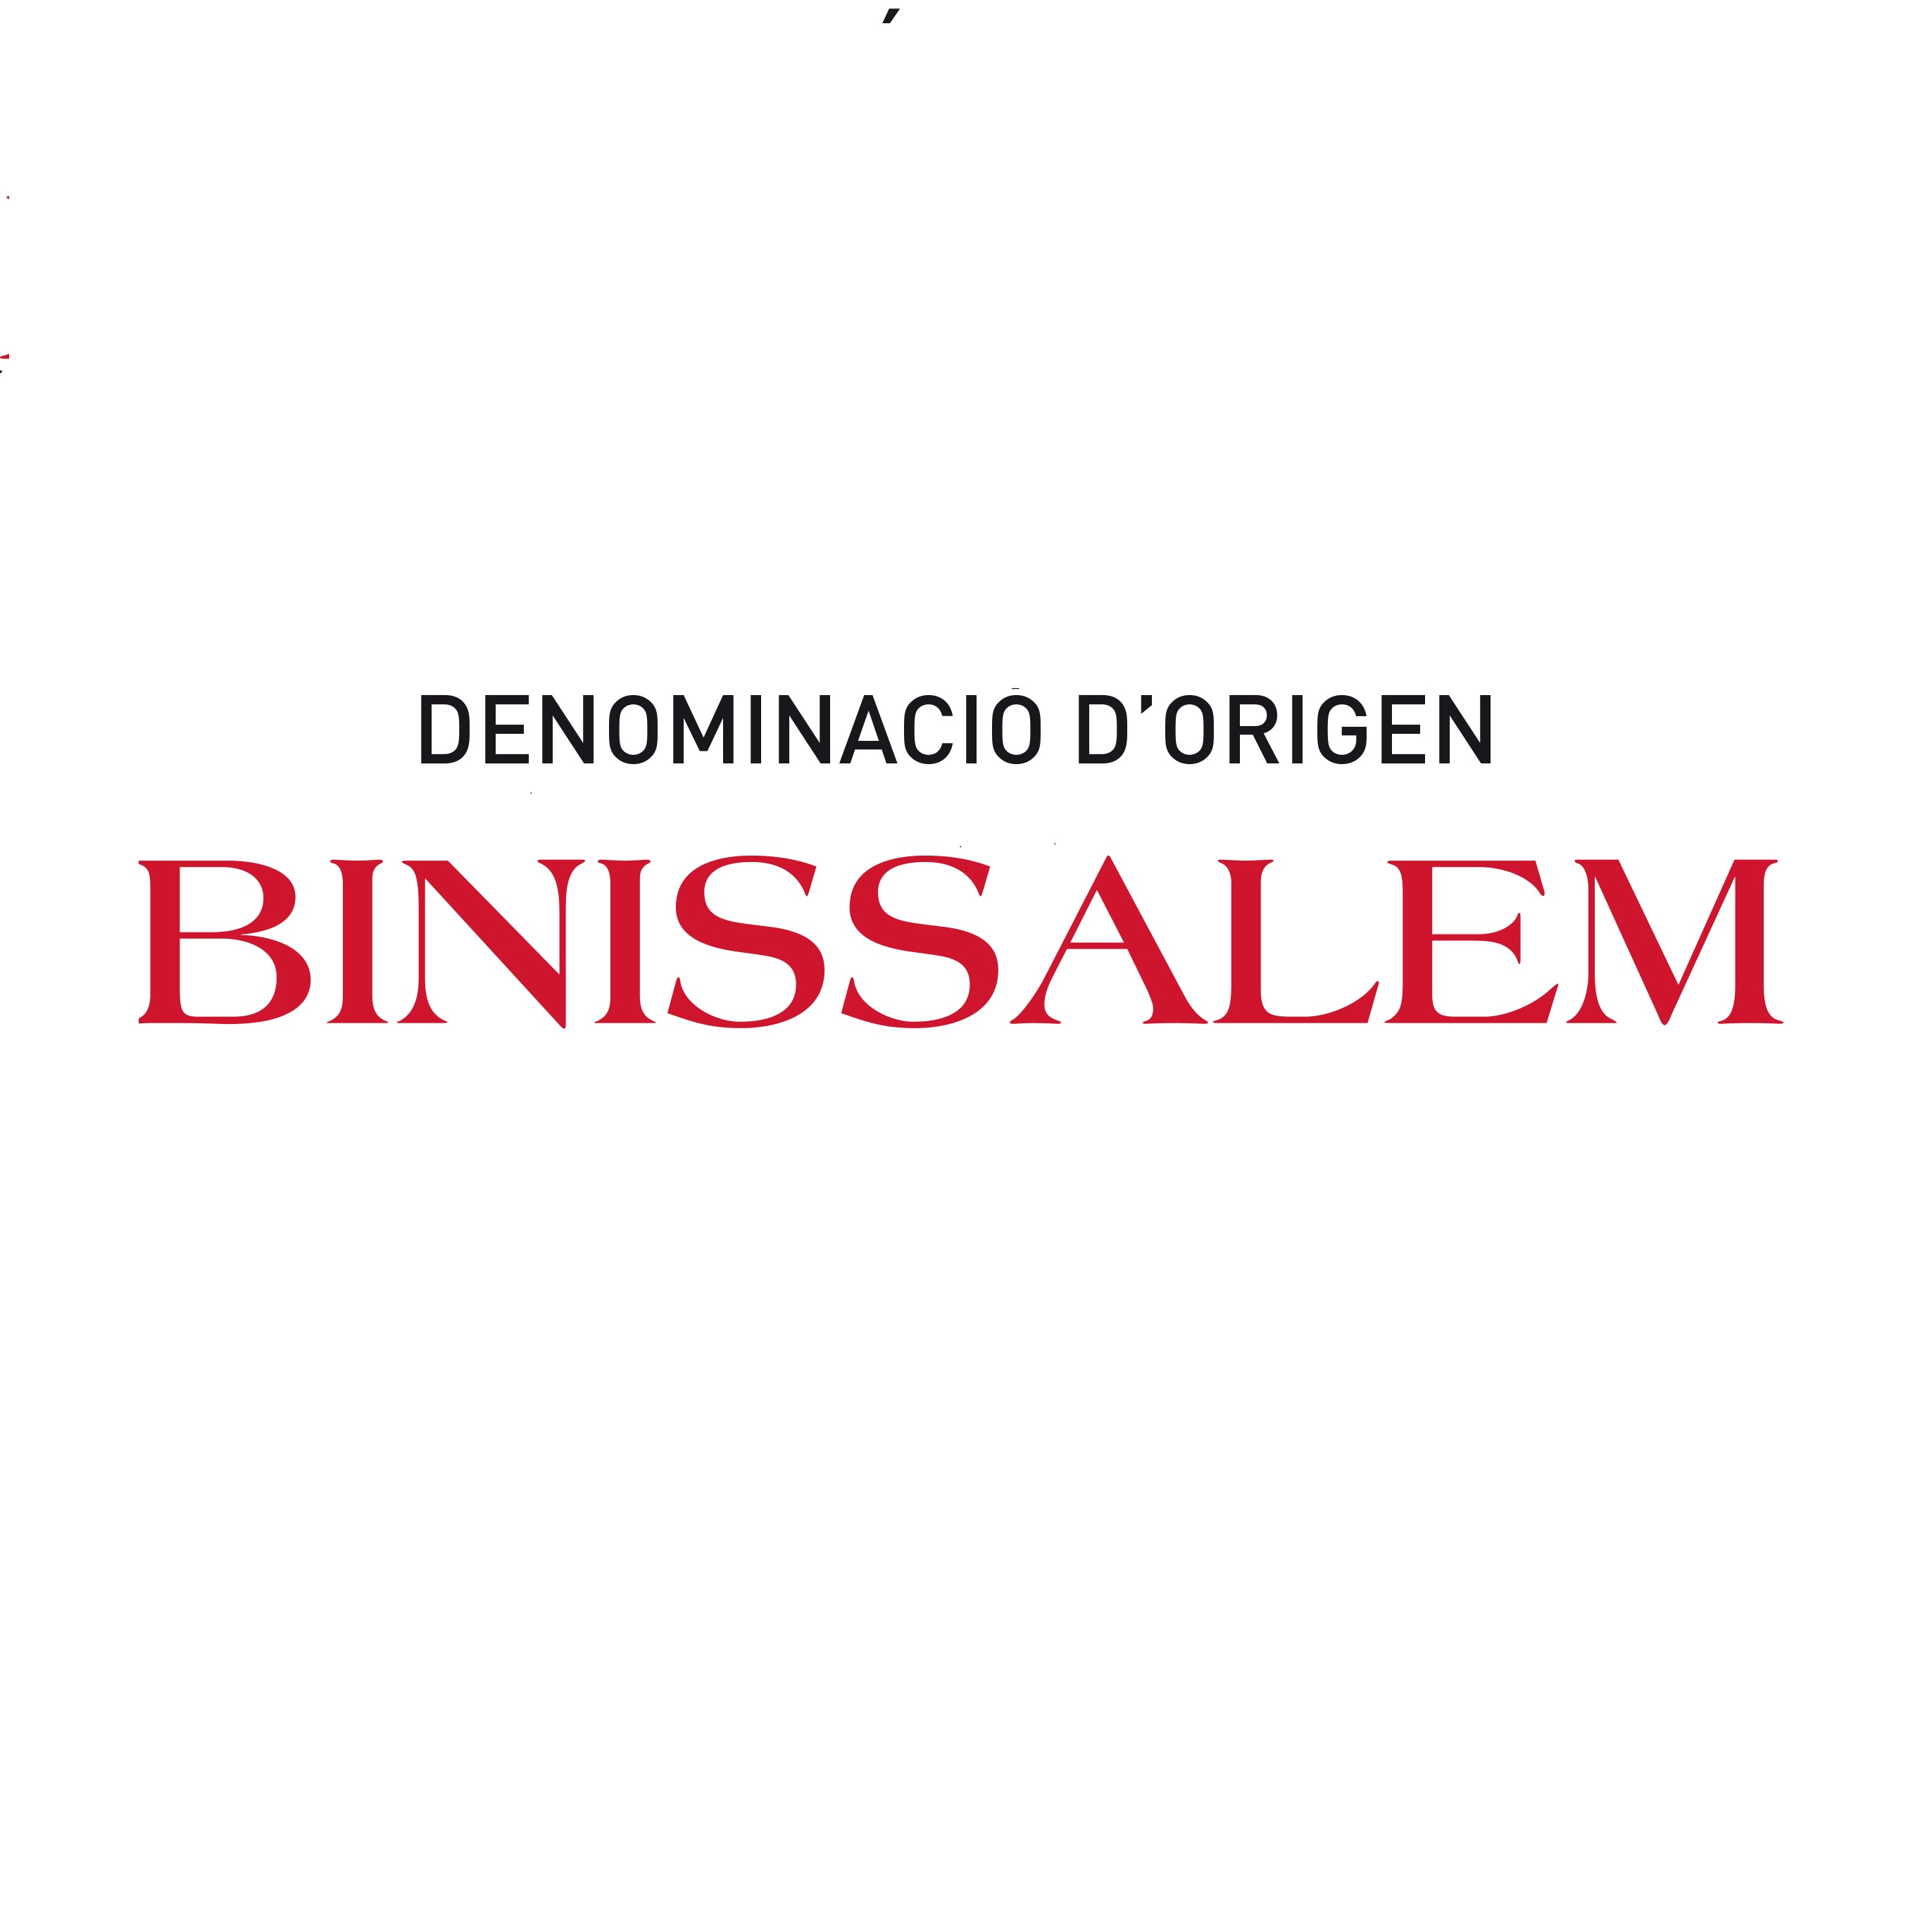 DO Binissalem - Photo gallery - Balearic Islands - Agrifoodstuffs, designations of origin and Balearic gastronomy